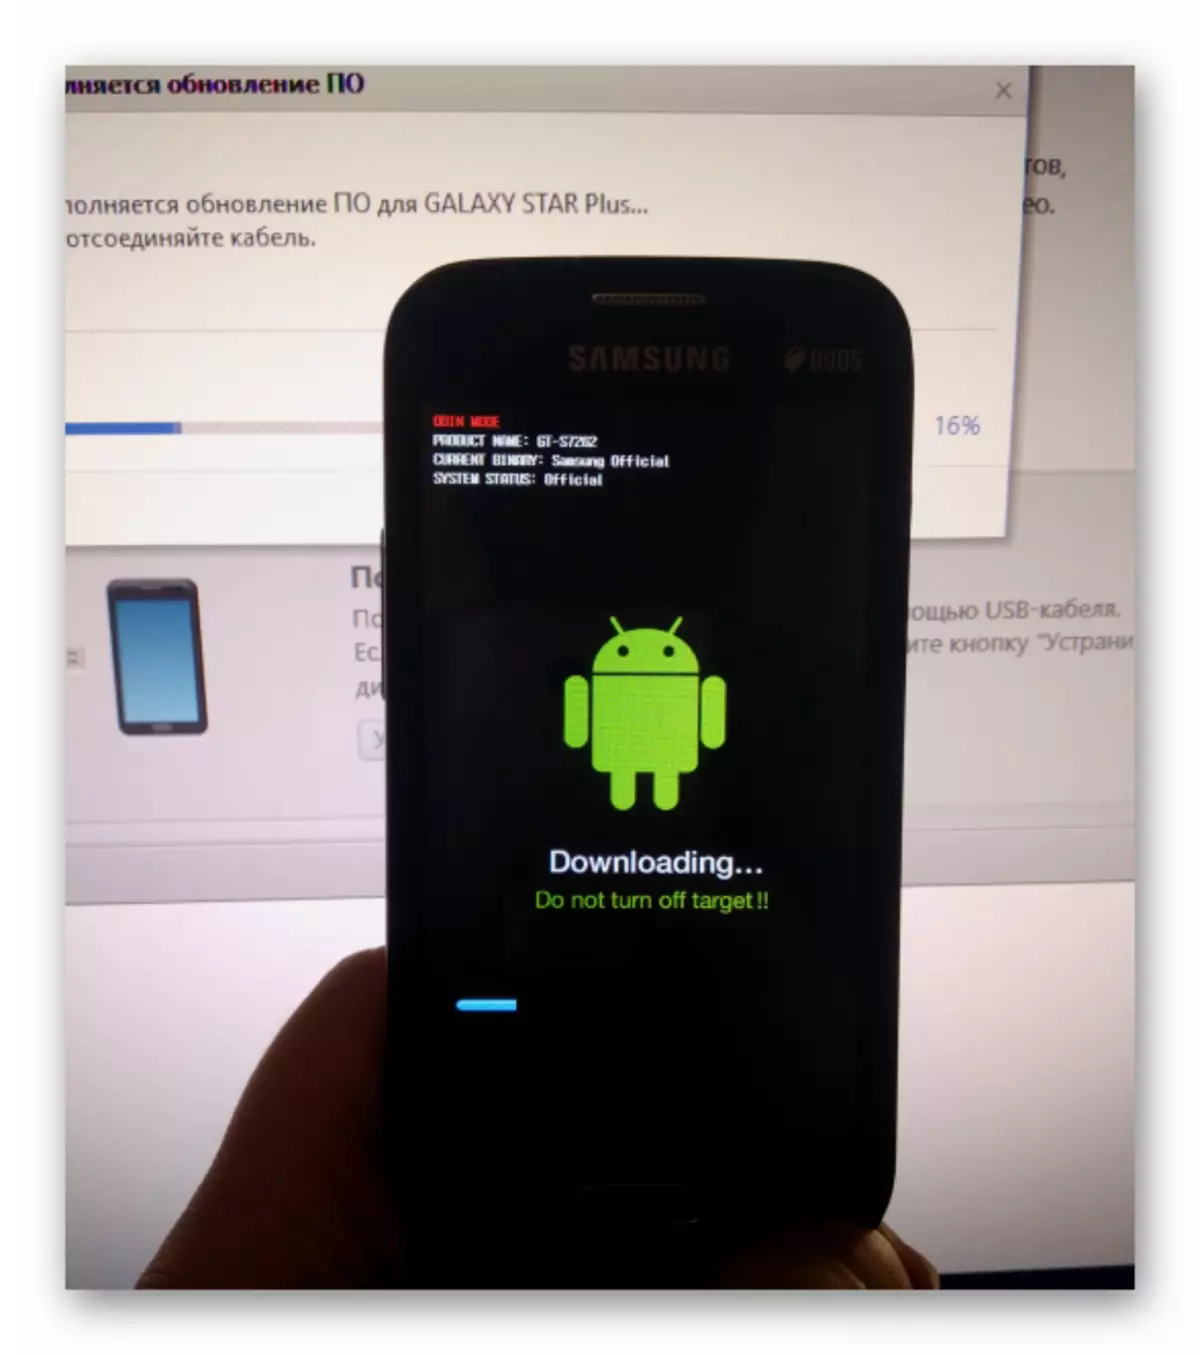 Samsung Galaxy Star Plus GT-S7262 Kies Intricator Update på smartphone skærmen